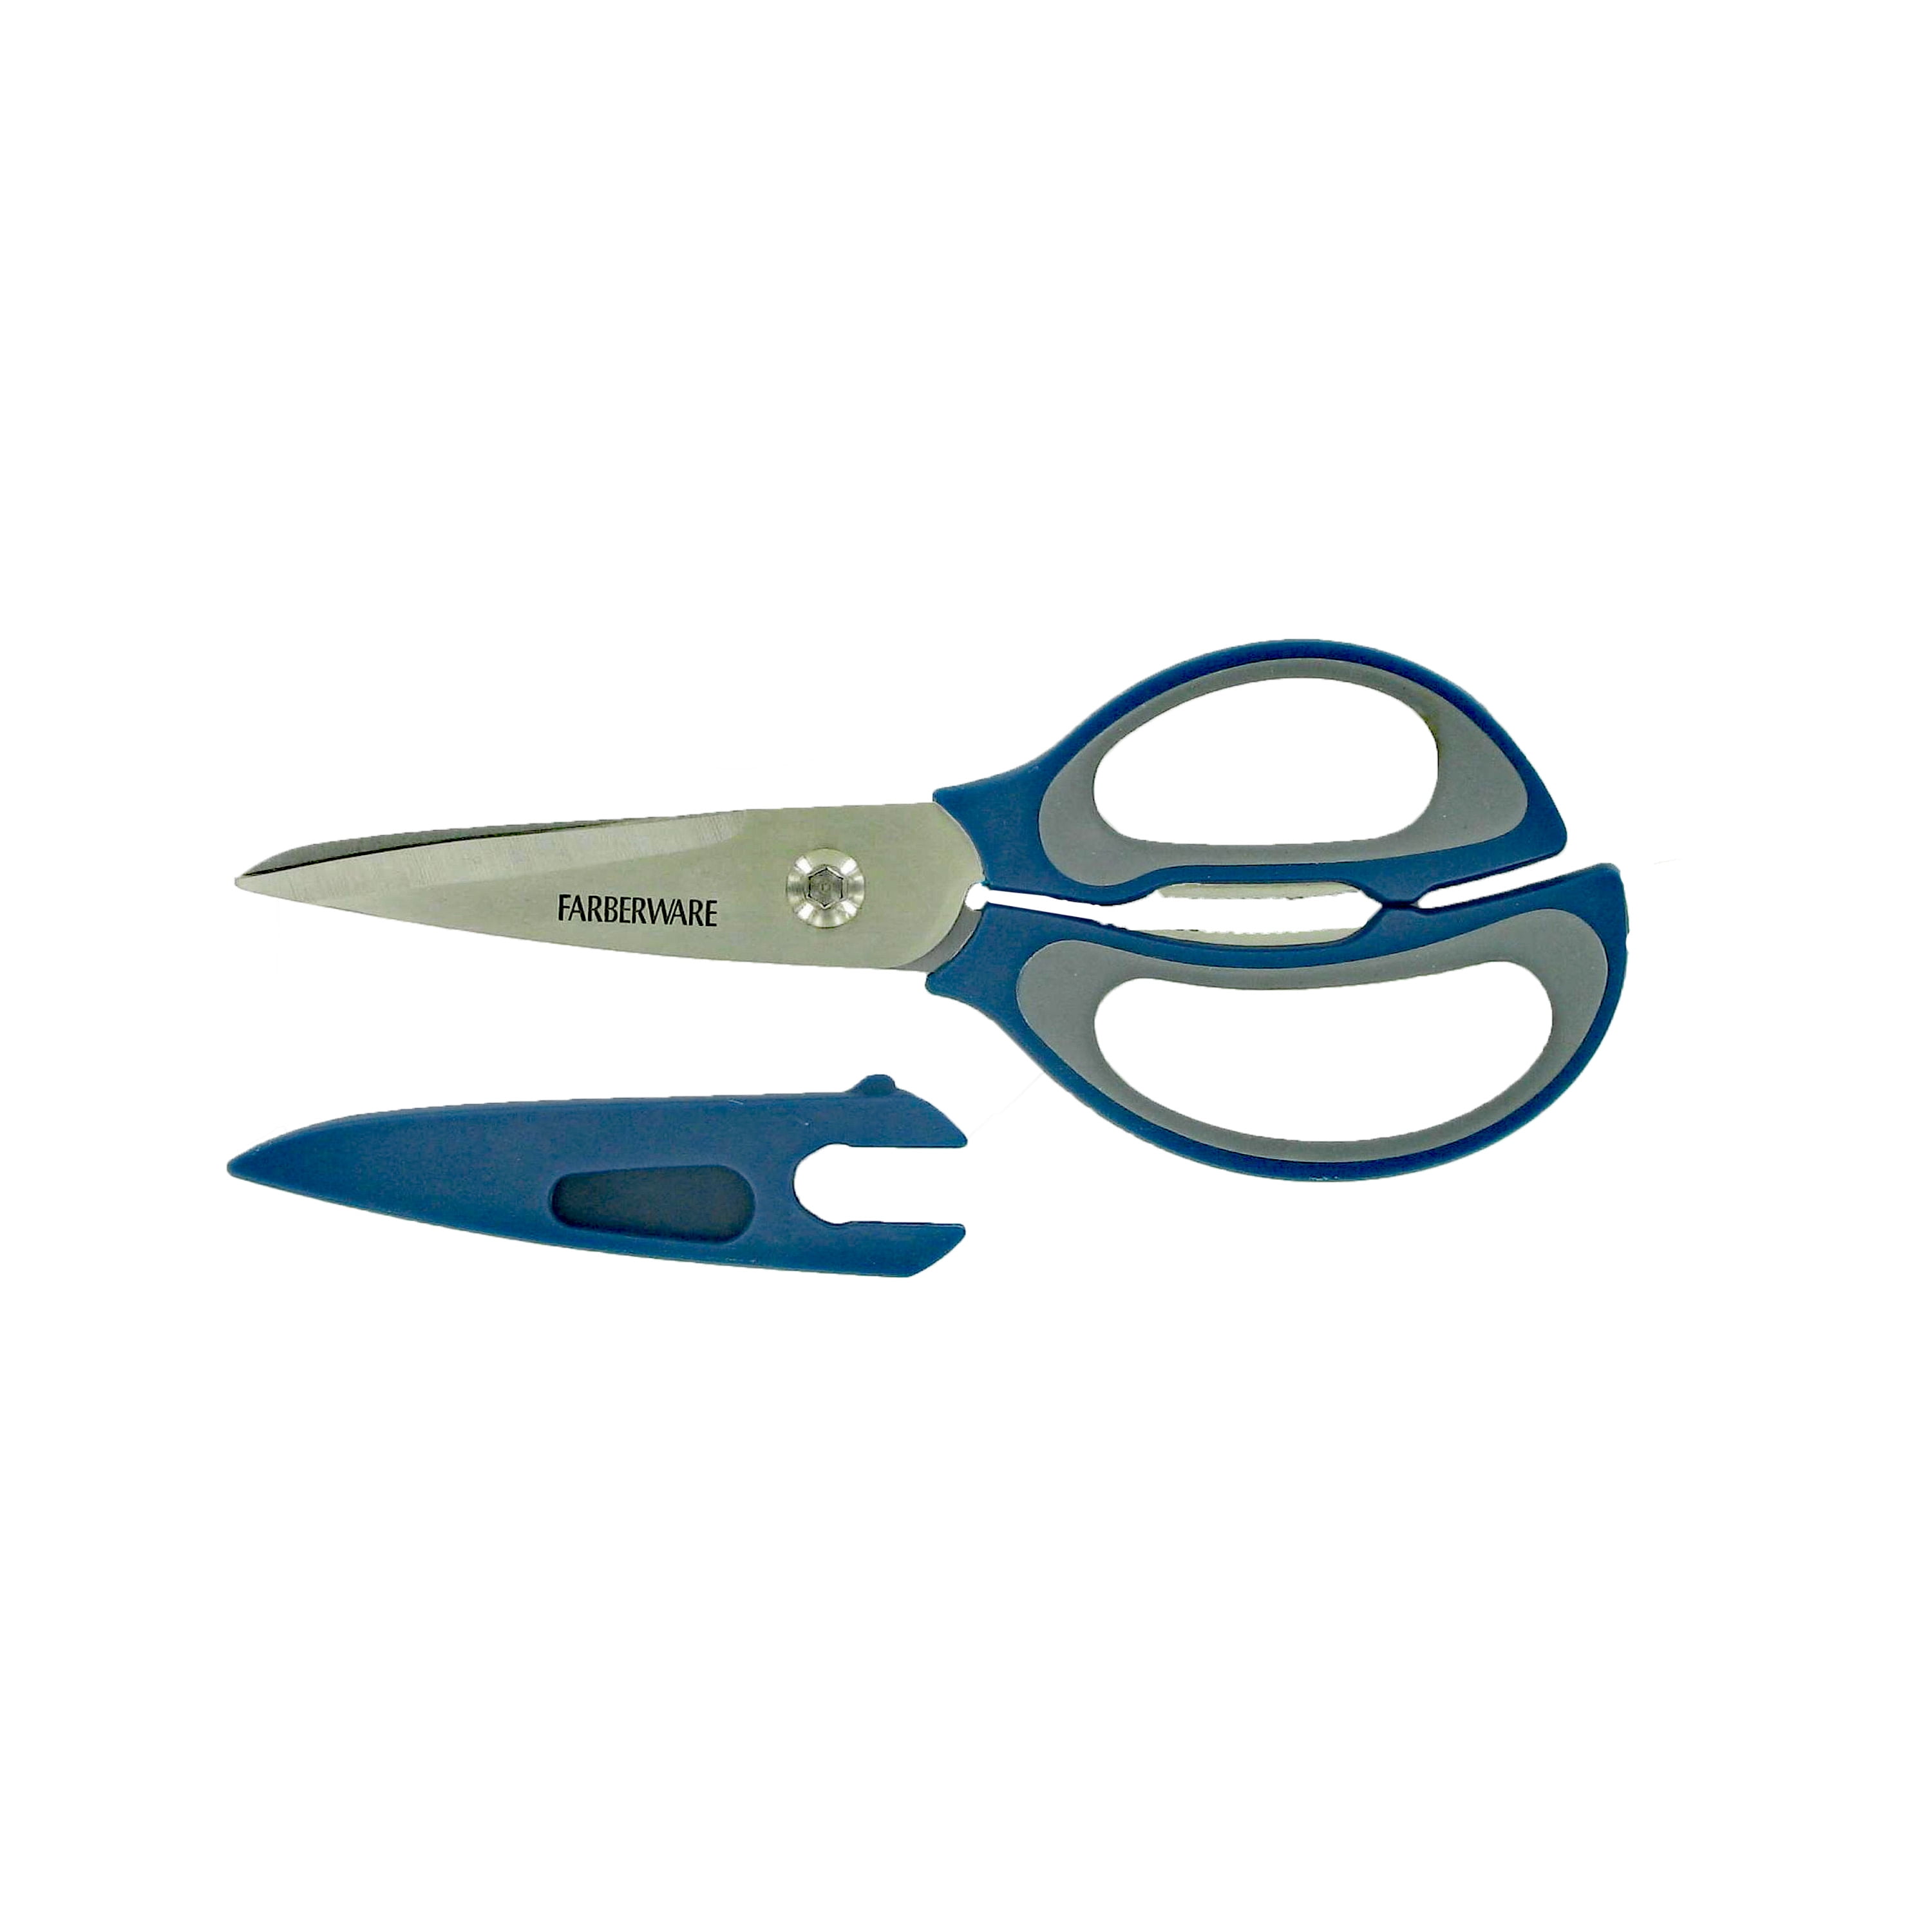 Farberware 4 in 1 Stainless Steel Scissors with Nonslip Handles in